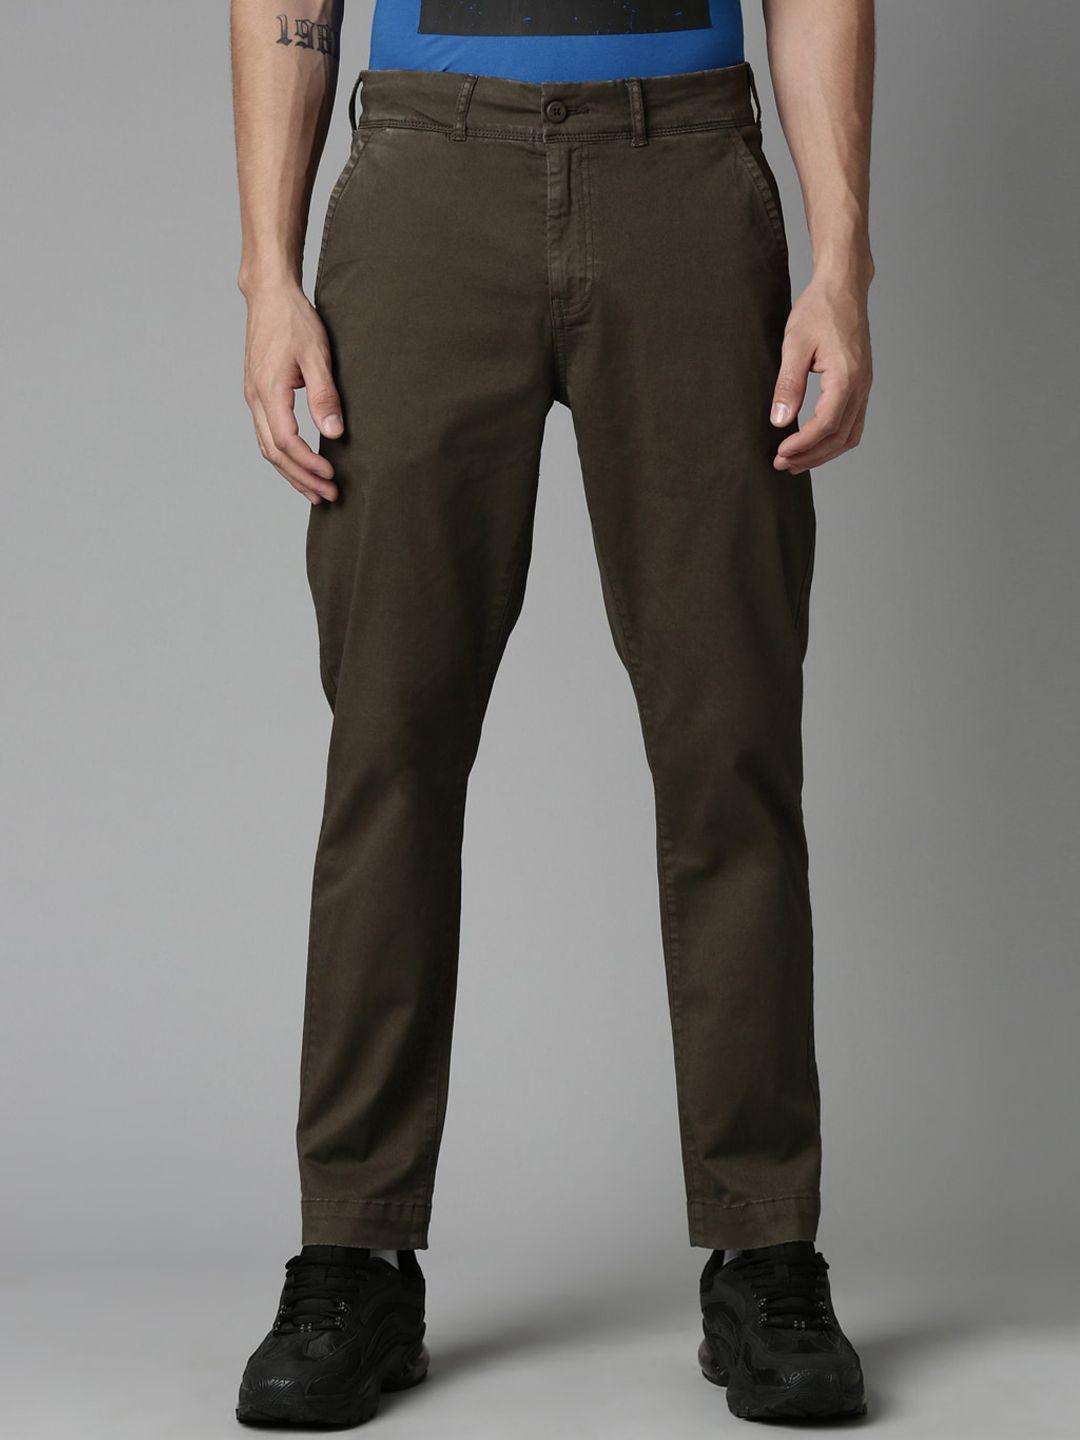 breakbounce-men-slim-fit-mid-rise-trousers